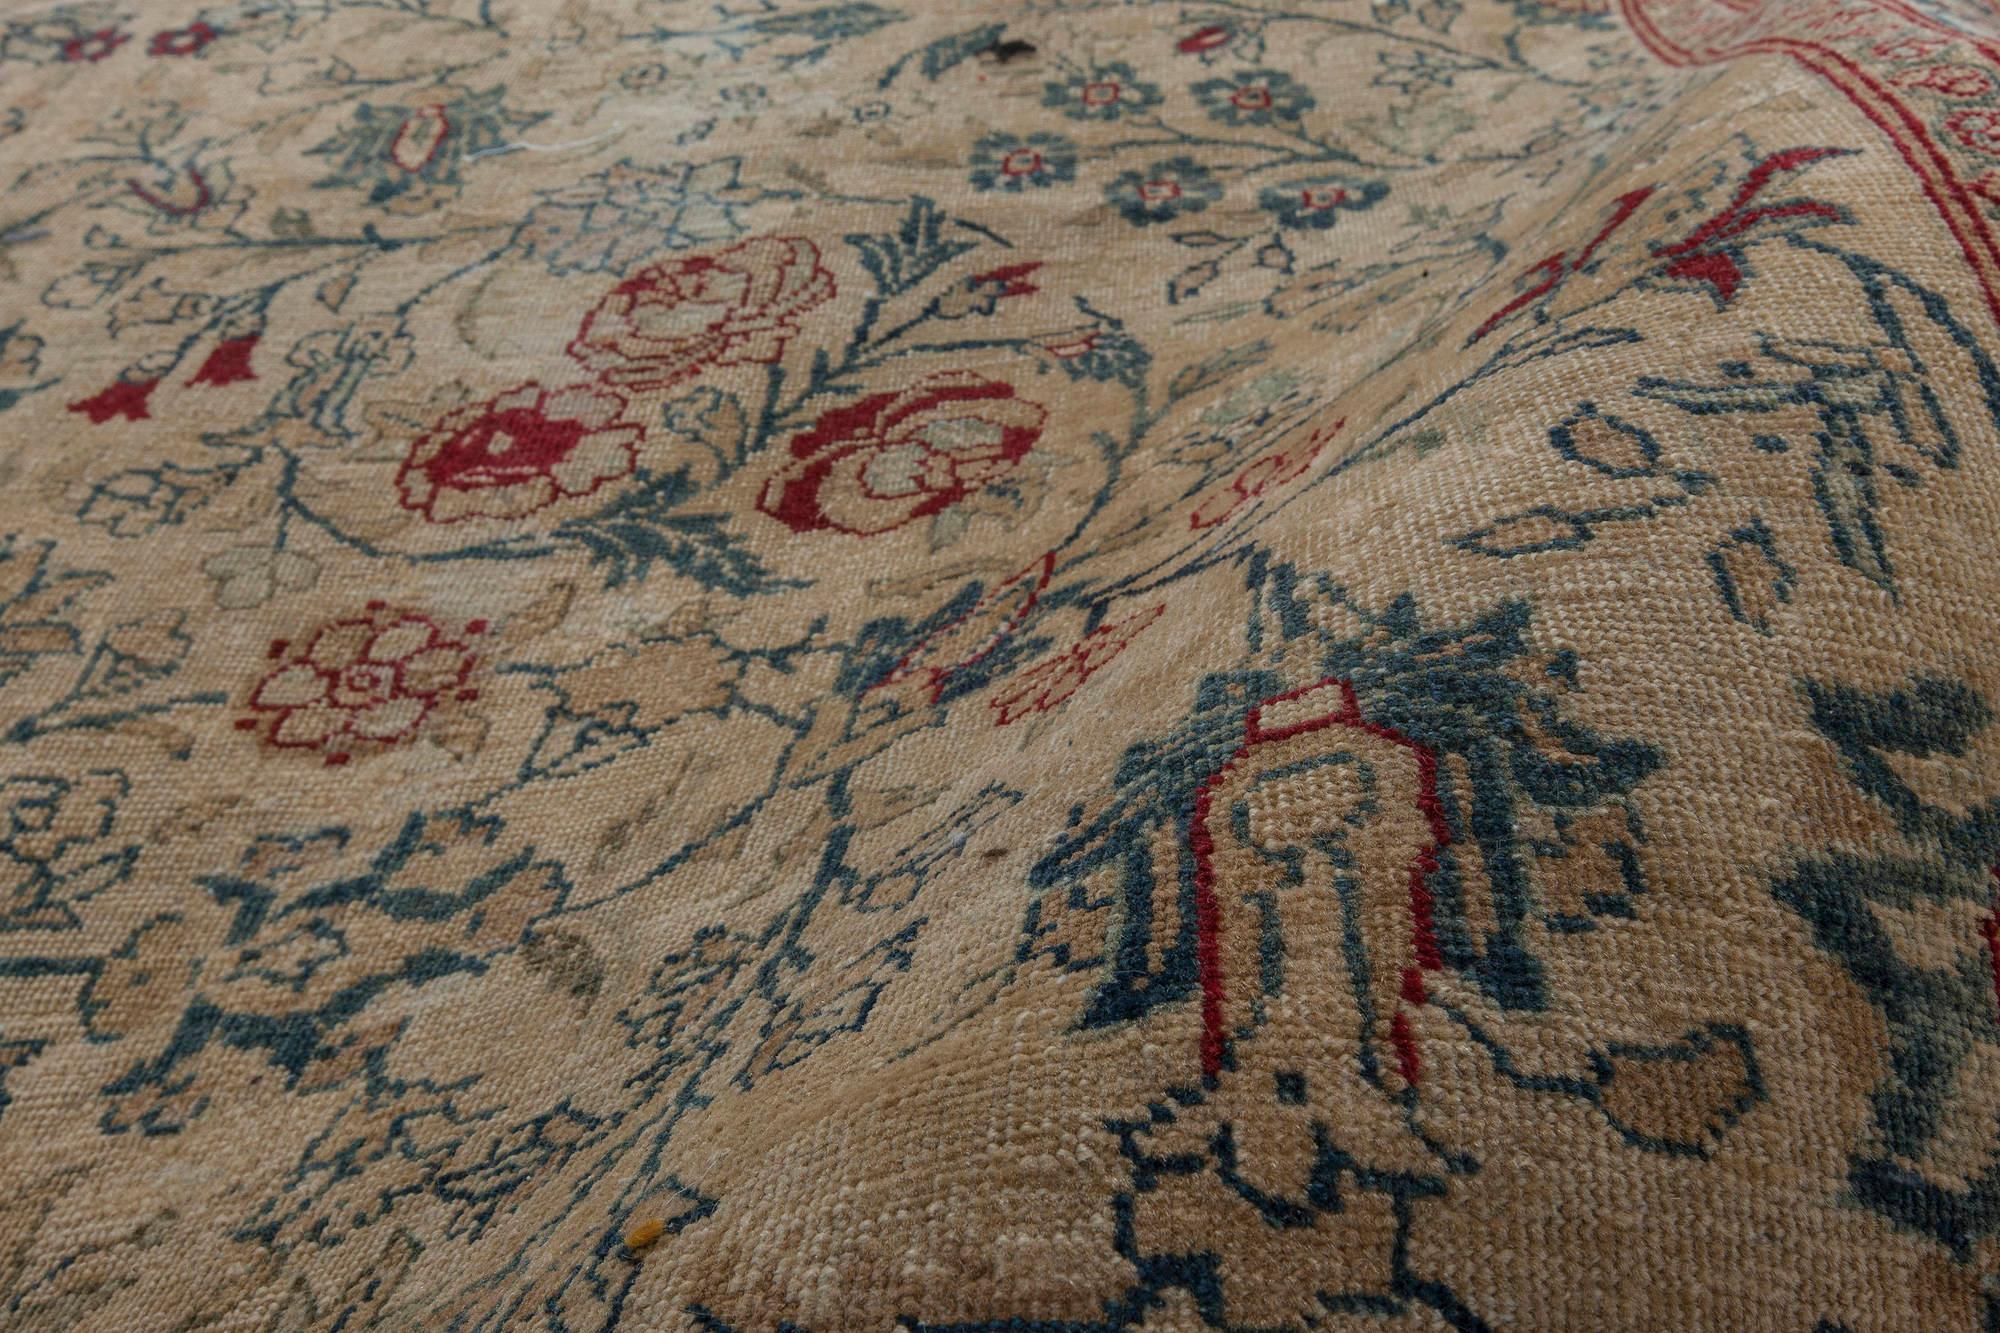 Antique Persian Tabriz Botanic Handmade Wool Rug
Size: 12'5